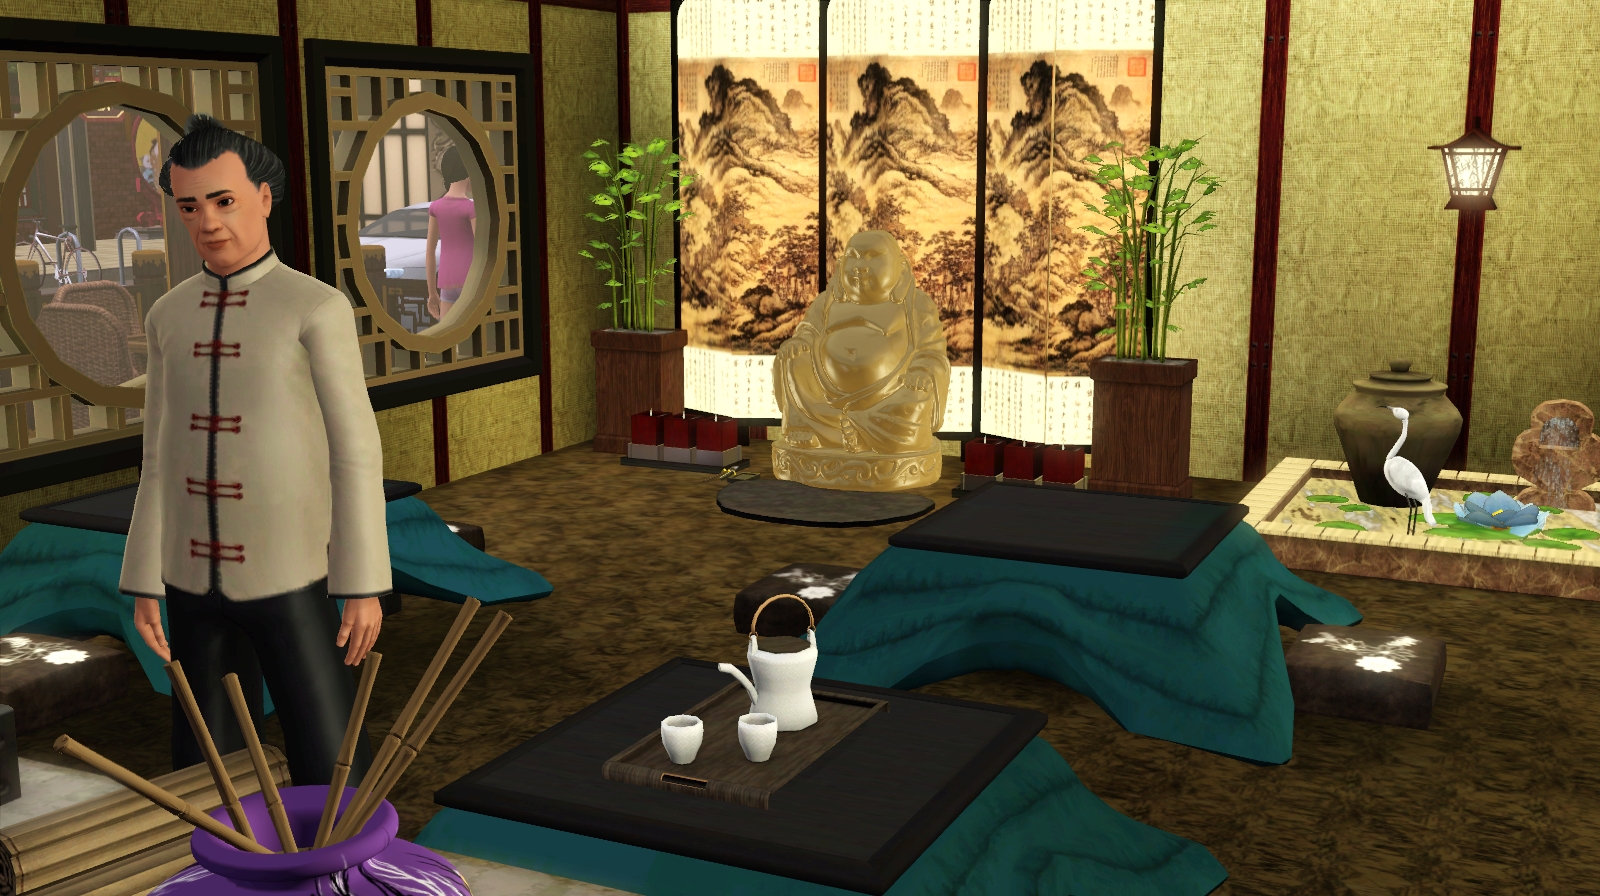 sims - The Sims 3.Общественные участки - Страница 2 Screenshot-30